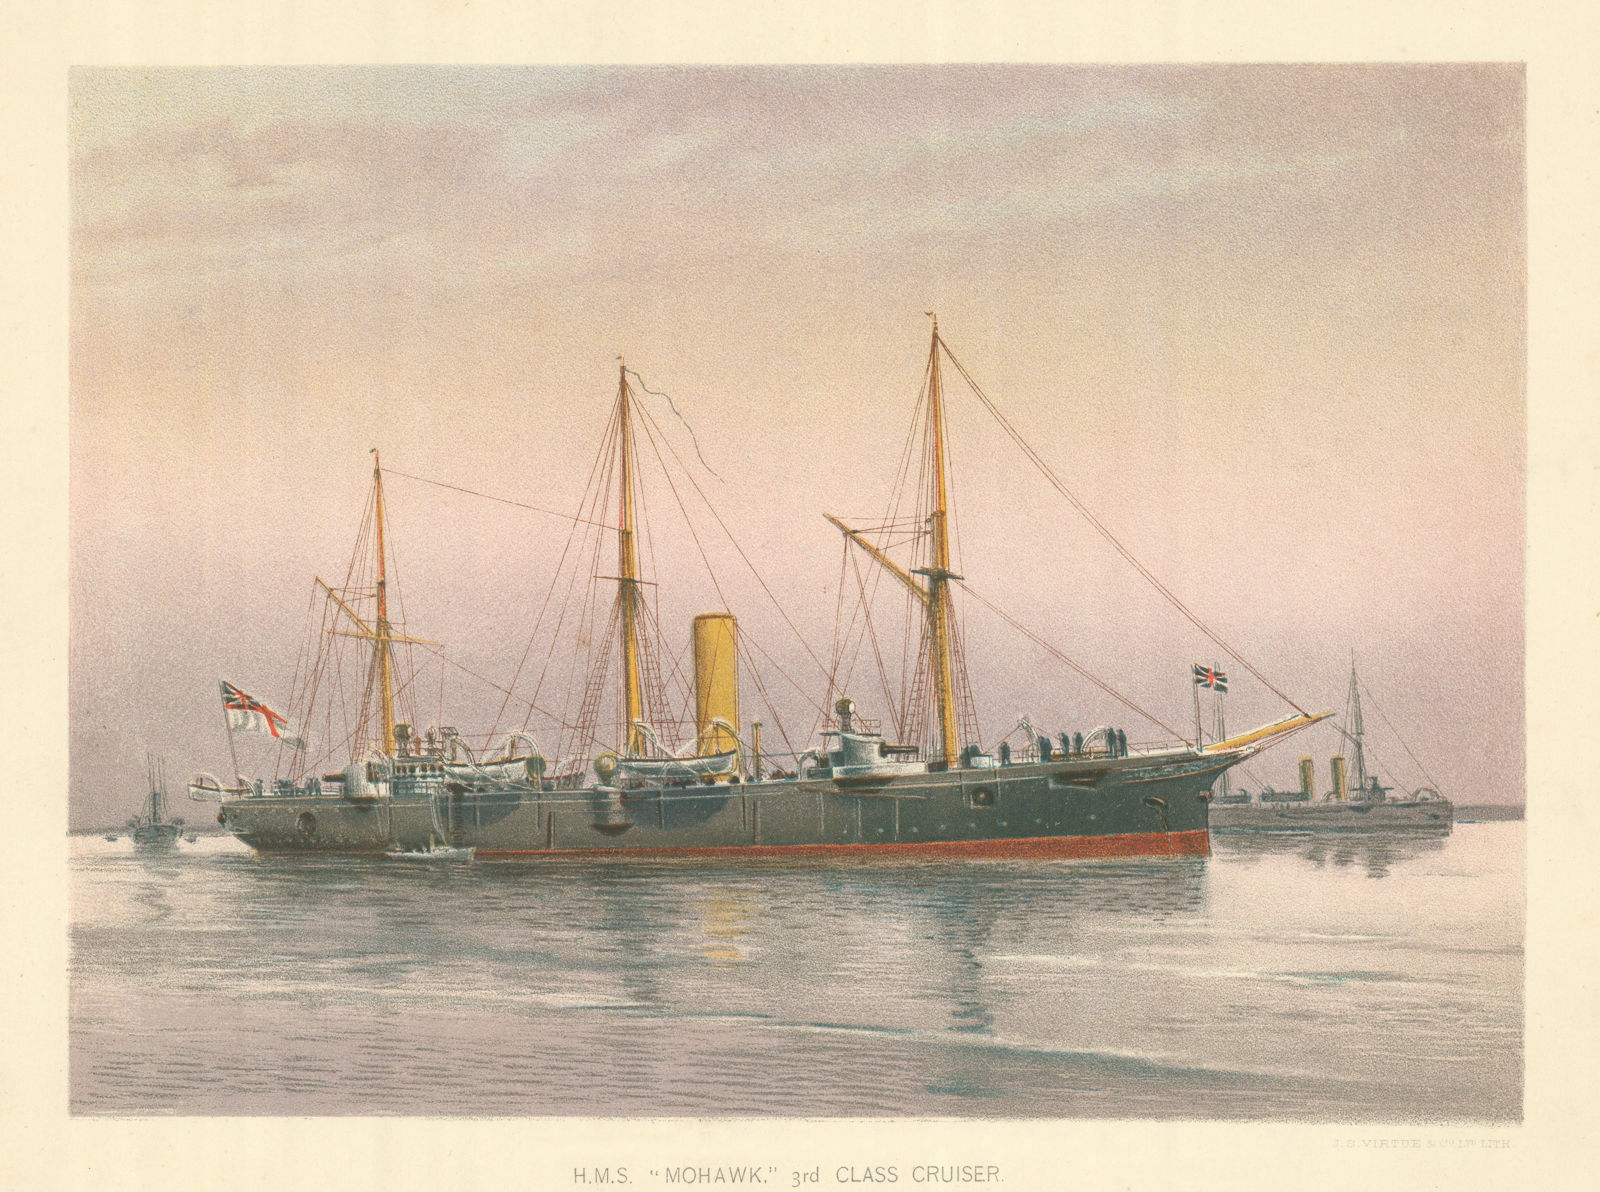 H.M.S. "Mohawk" - 3rd class cruiser (1886) by W.F. Mitchell. Royal Navy 1893